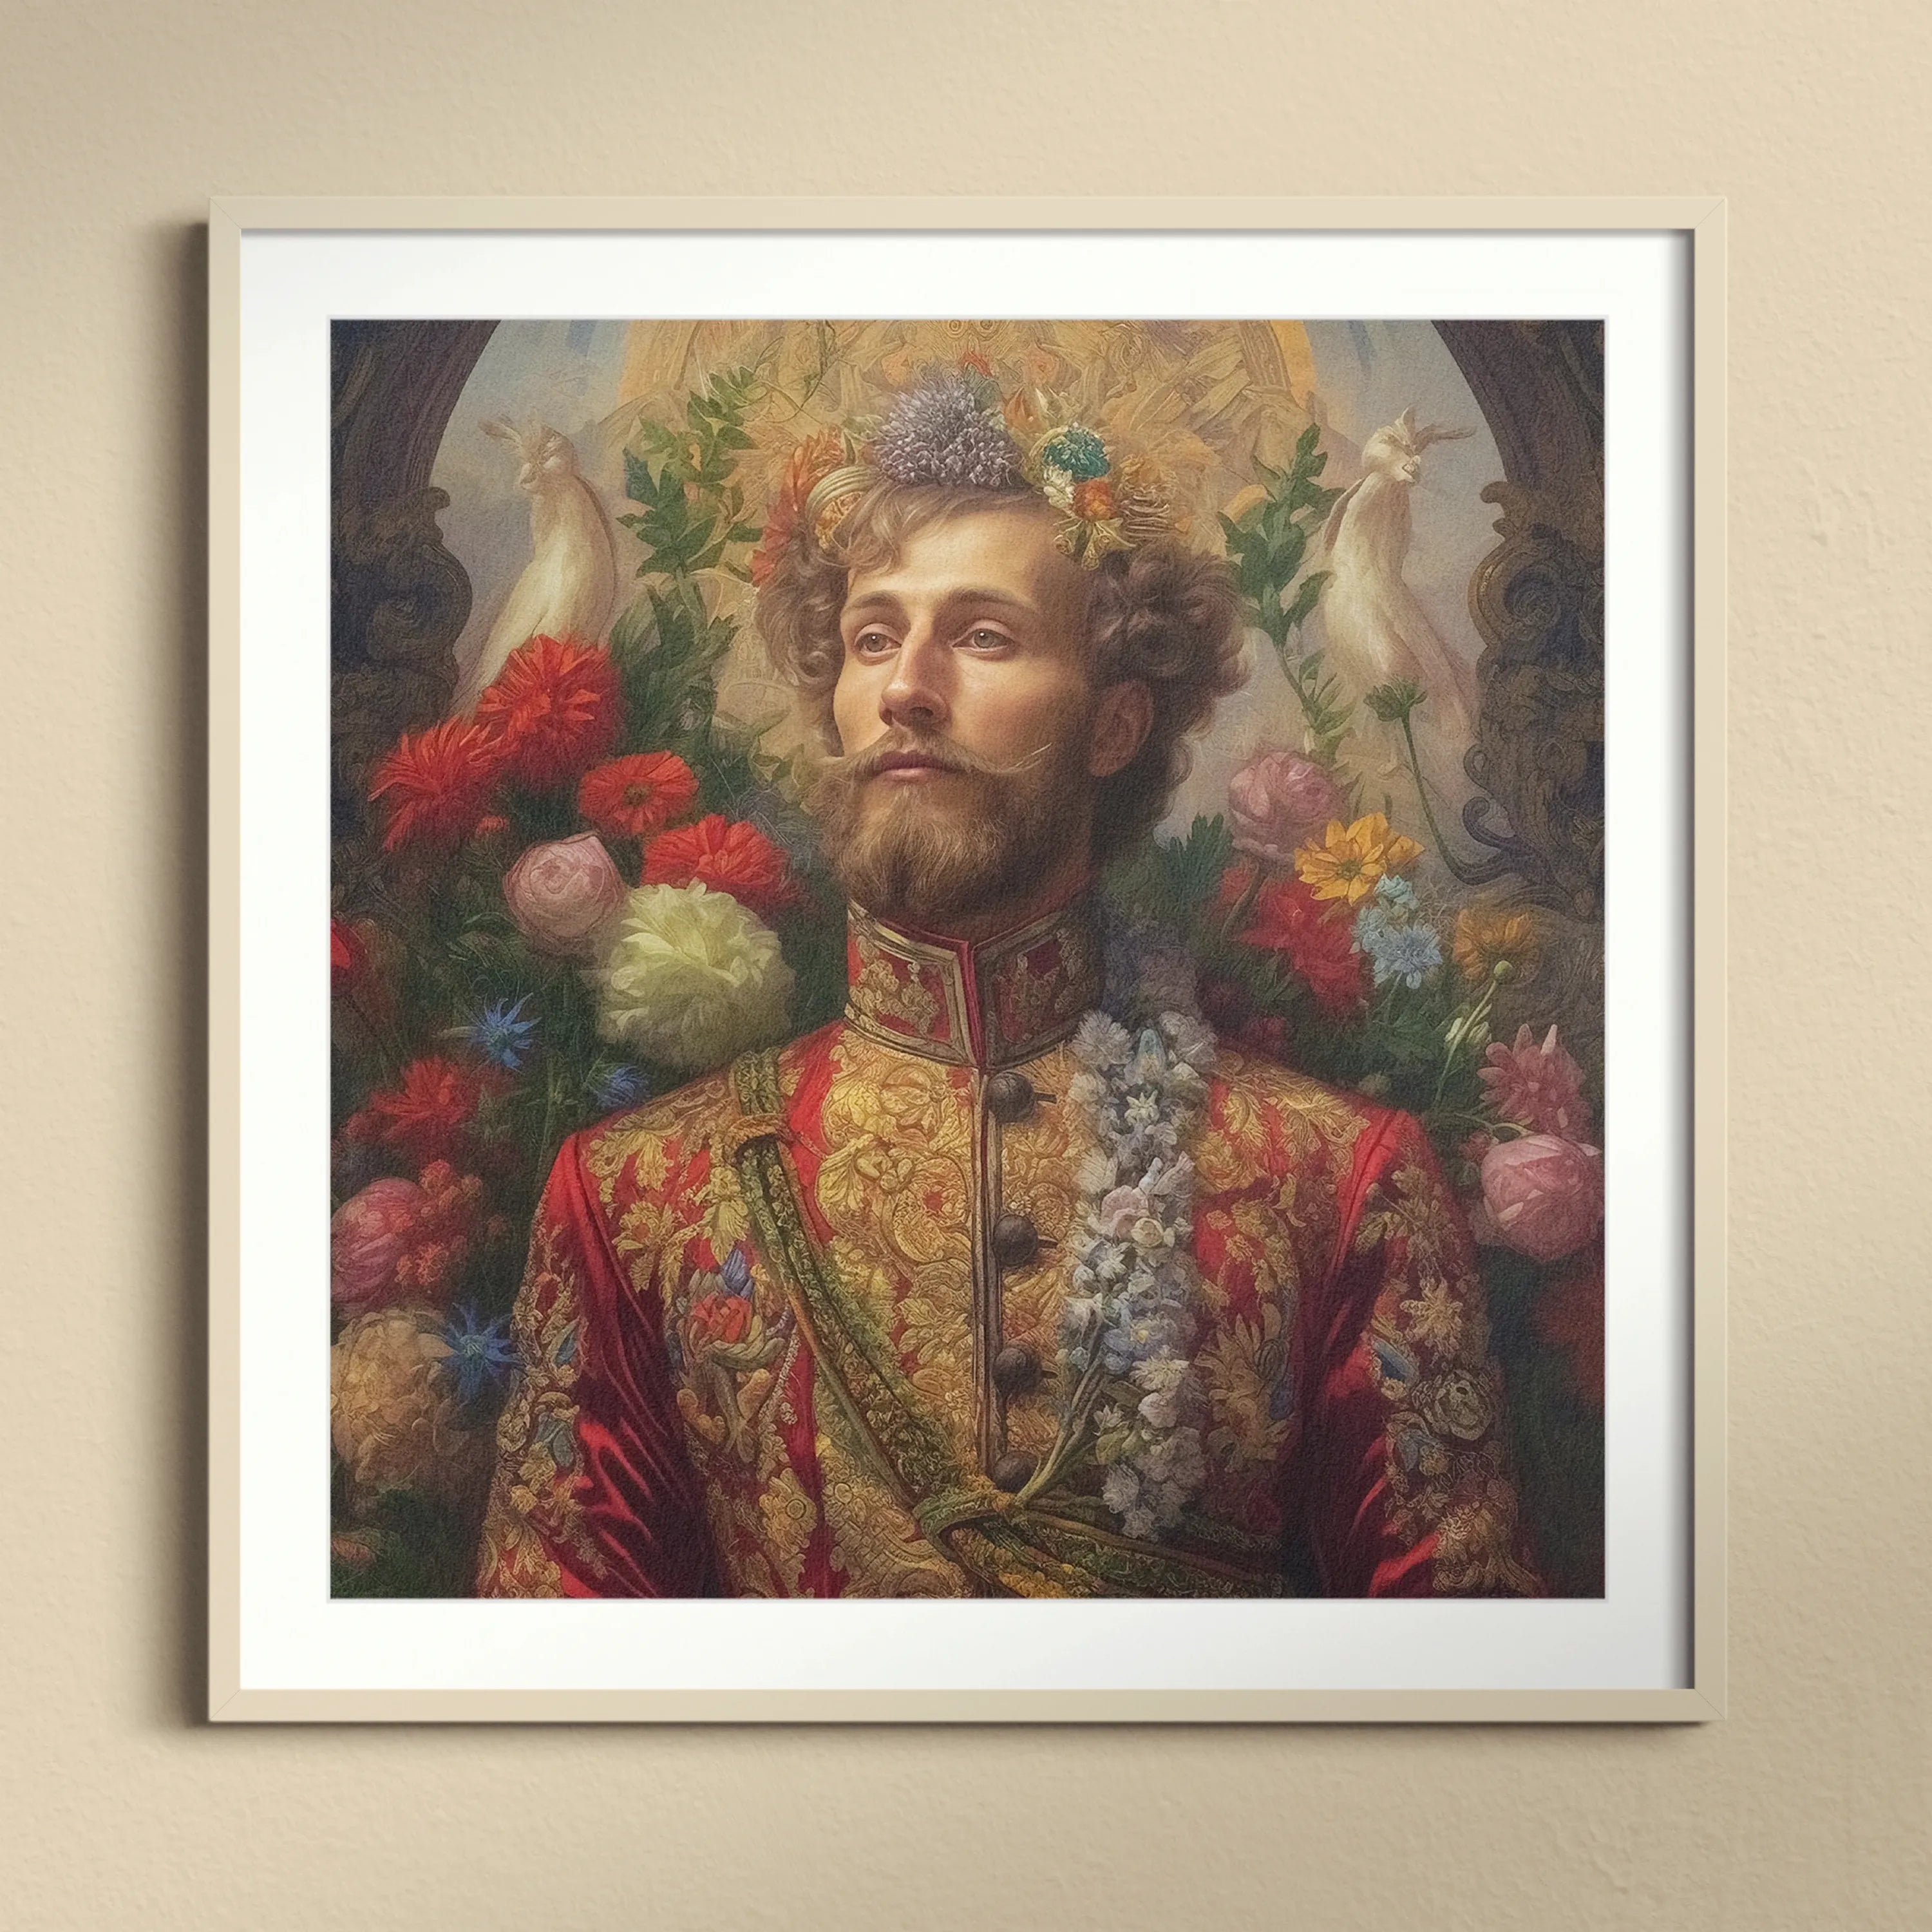 Prince Fyodor - Handsome Gay Russian Royalty Queerart Print - 16’x16’ - Posters Prints & Visual Artwork - Aesthetic Art